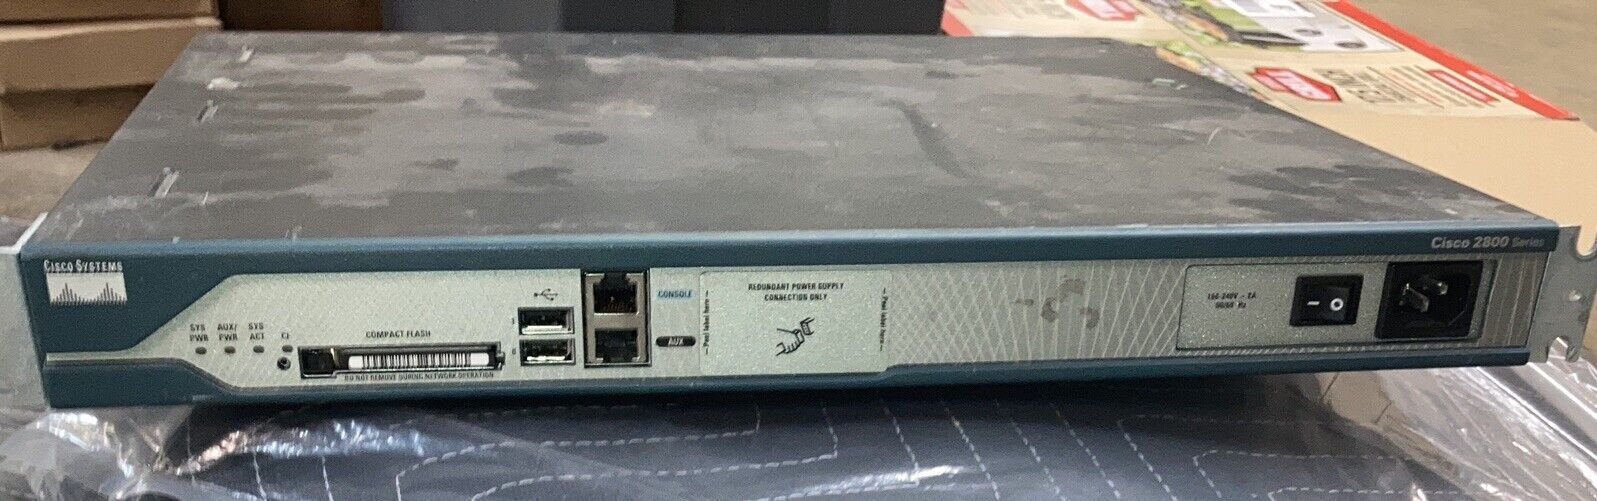 Cisco 2800 Series 2811 With WIC 1DSU T1 & VWIC 2MFT-T1